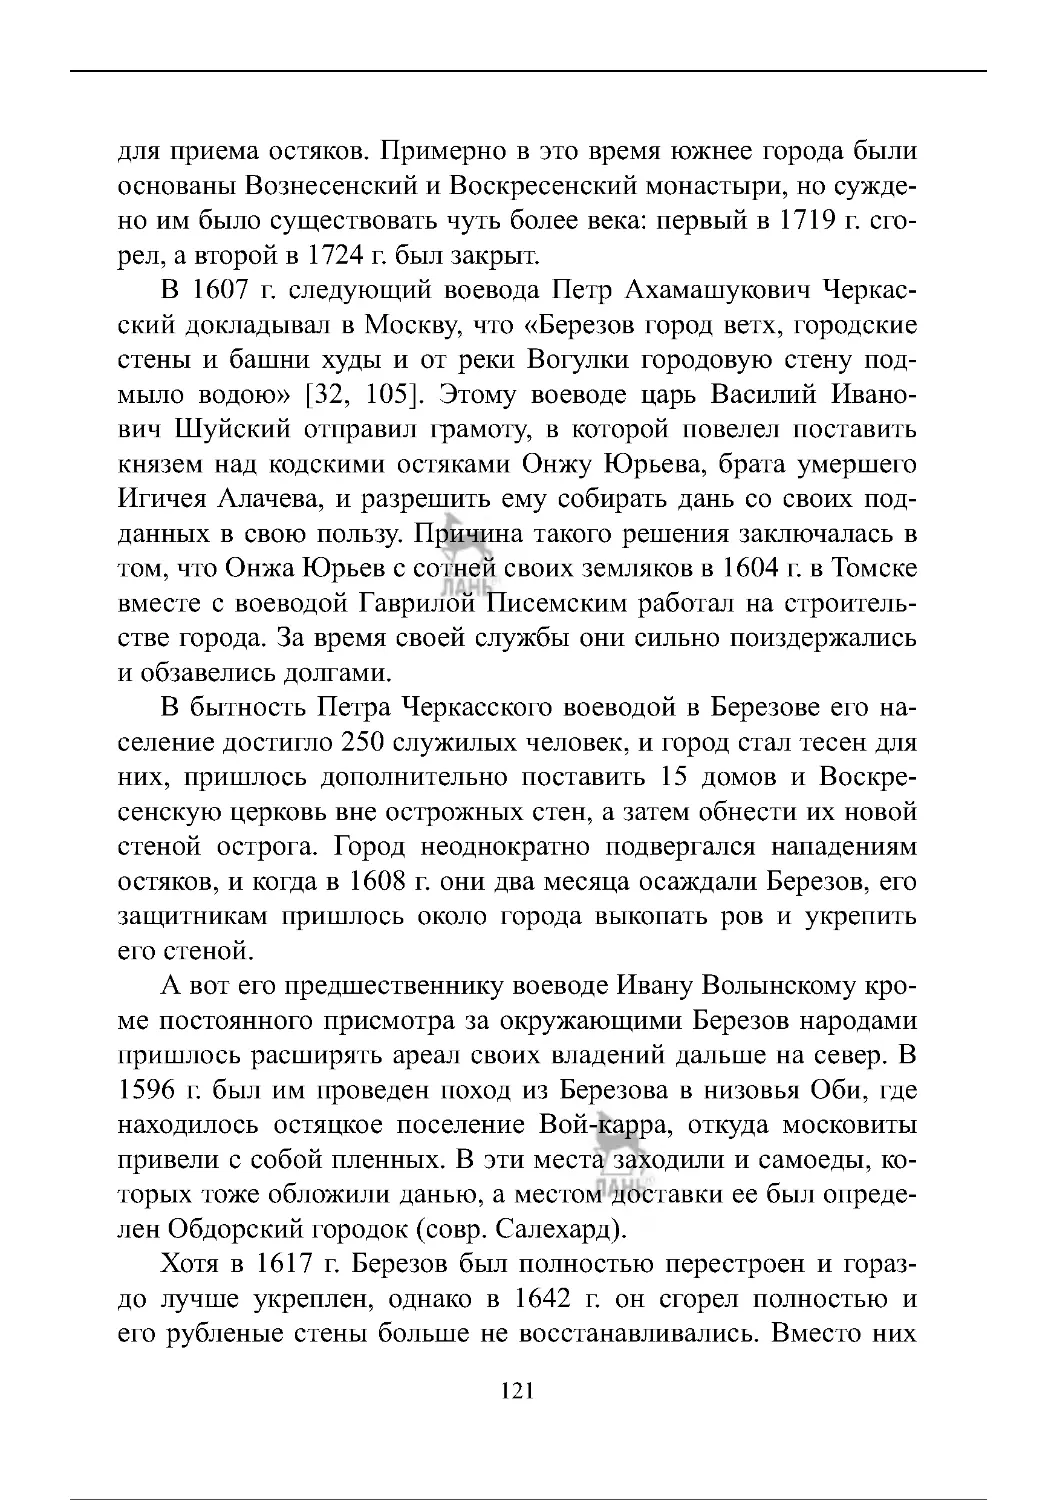 istoria_zavoevania_i_kolonizacii_sibiri_121-180